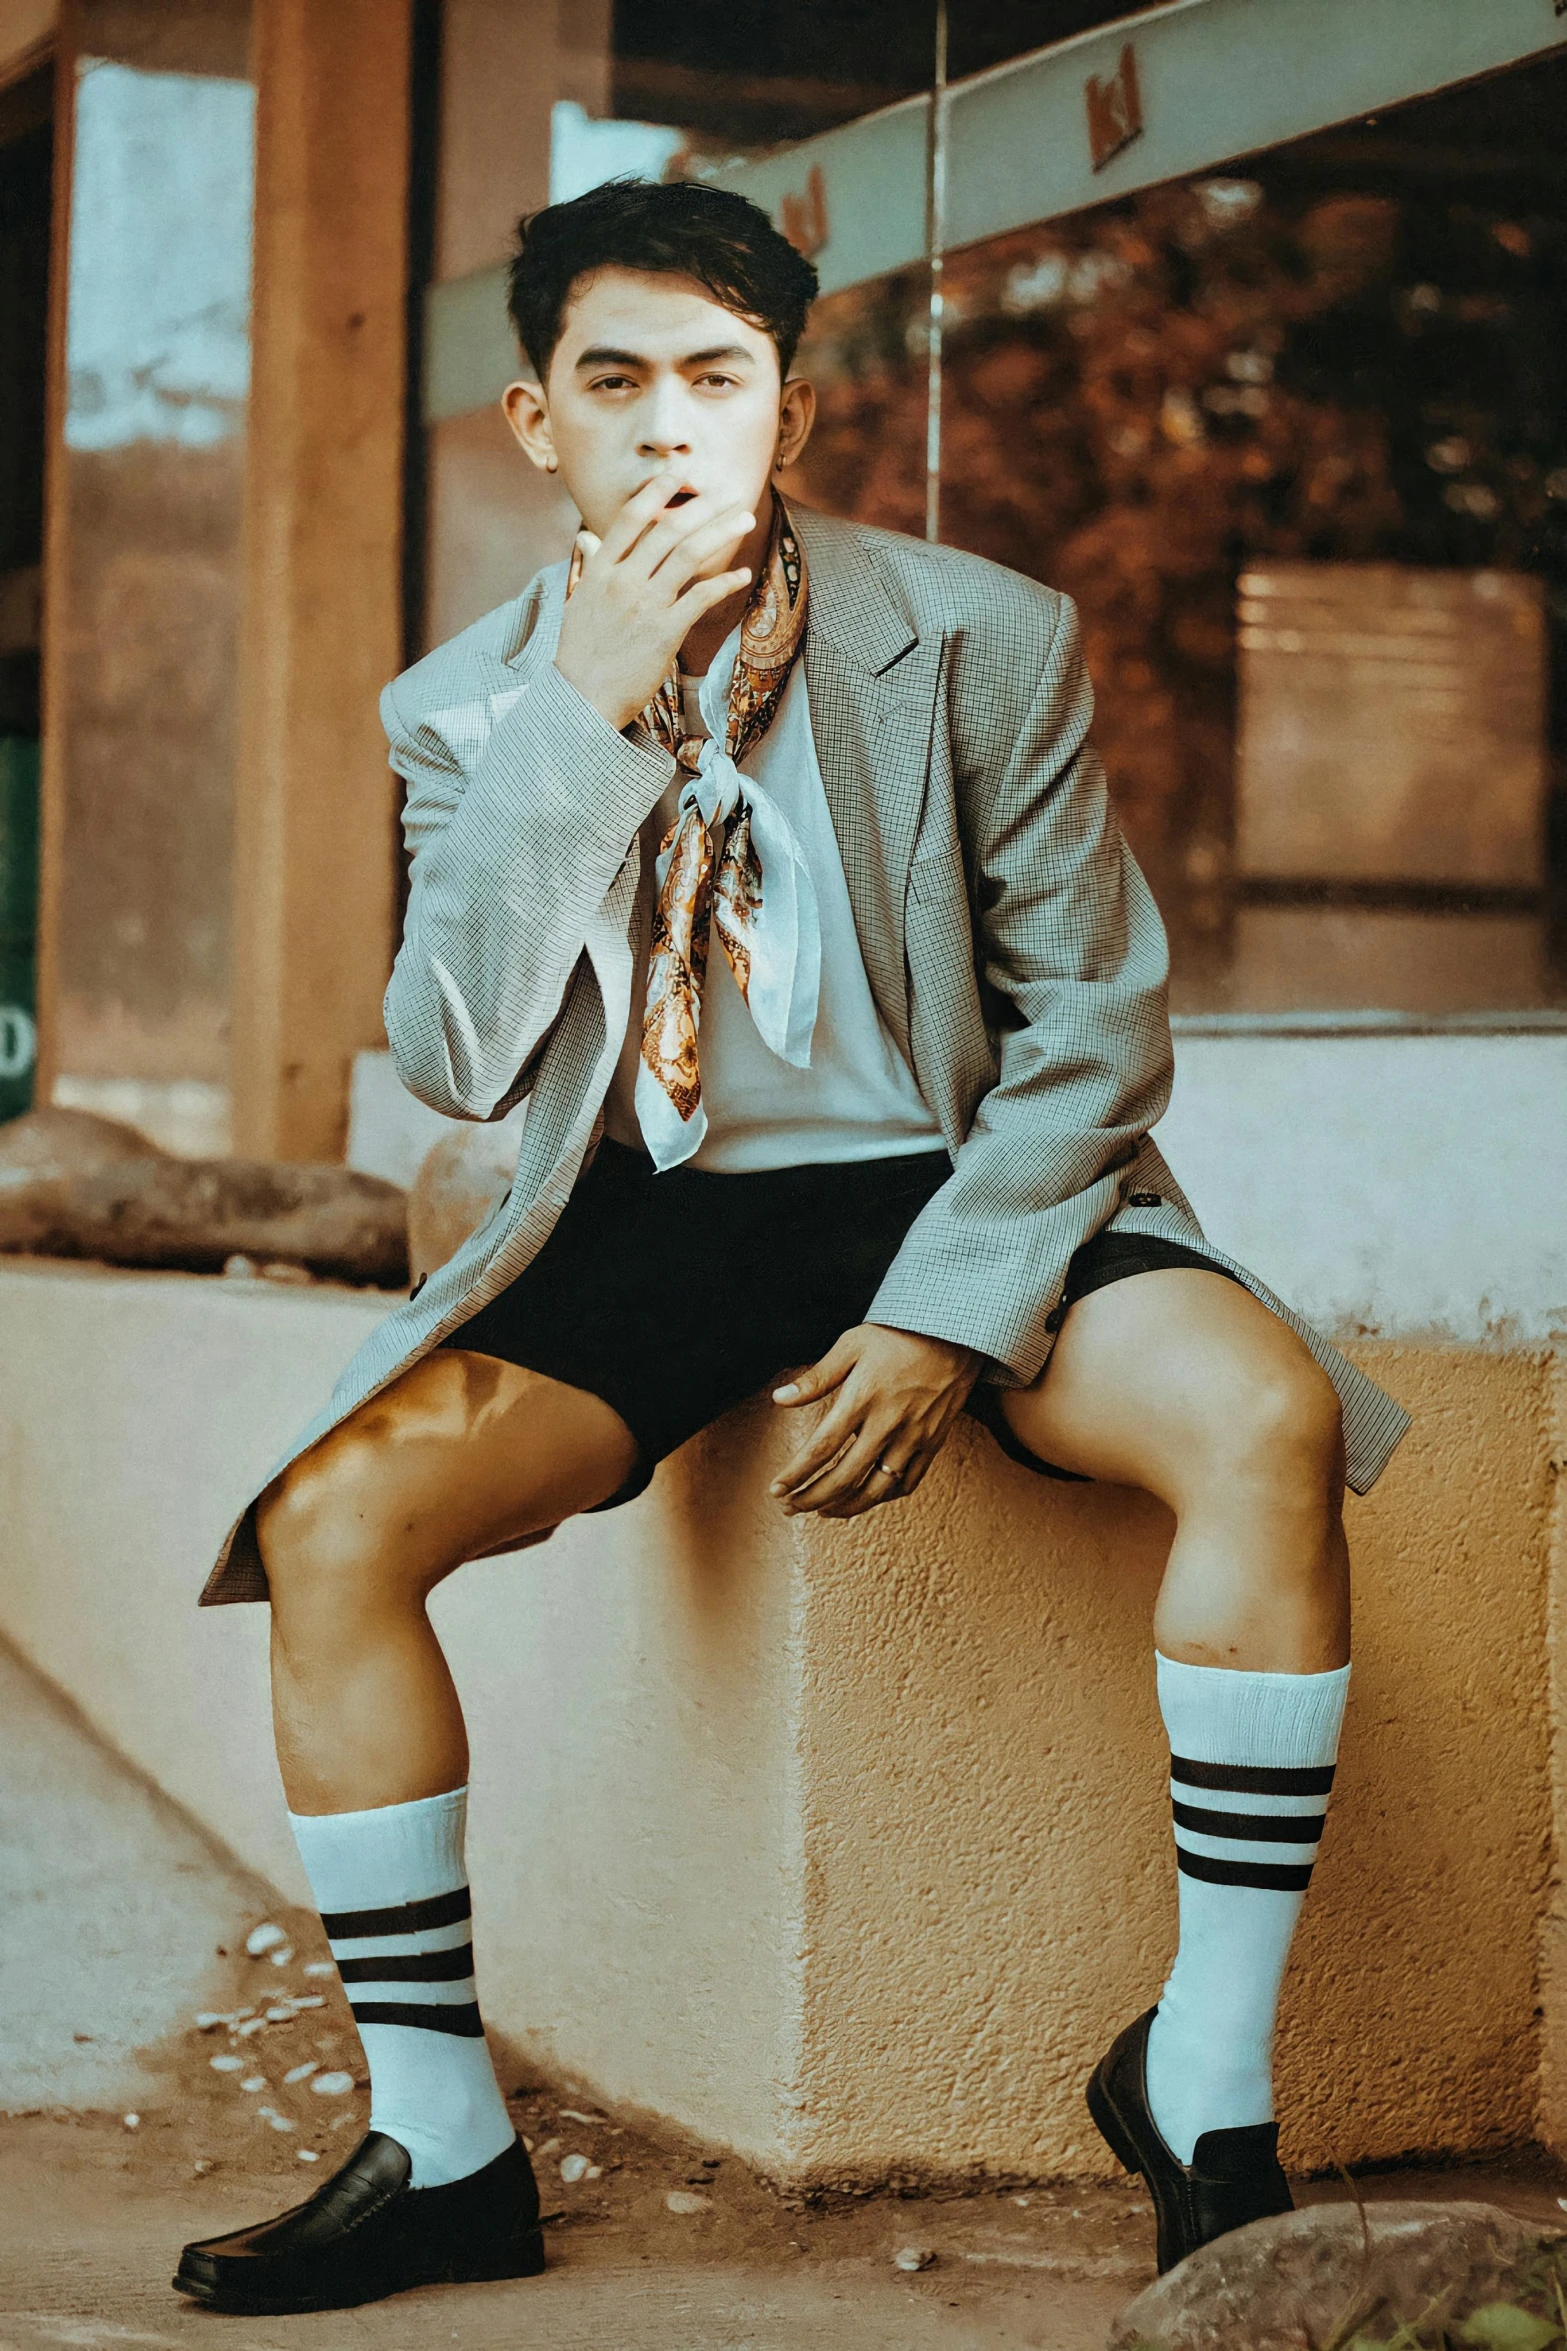 a man smoking a cigarette wearing shorts and socks